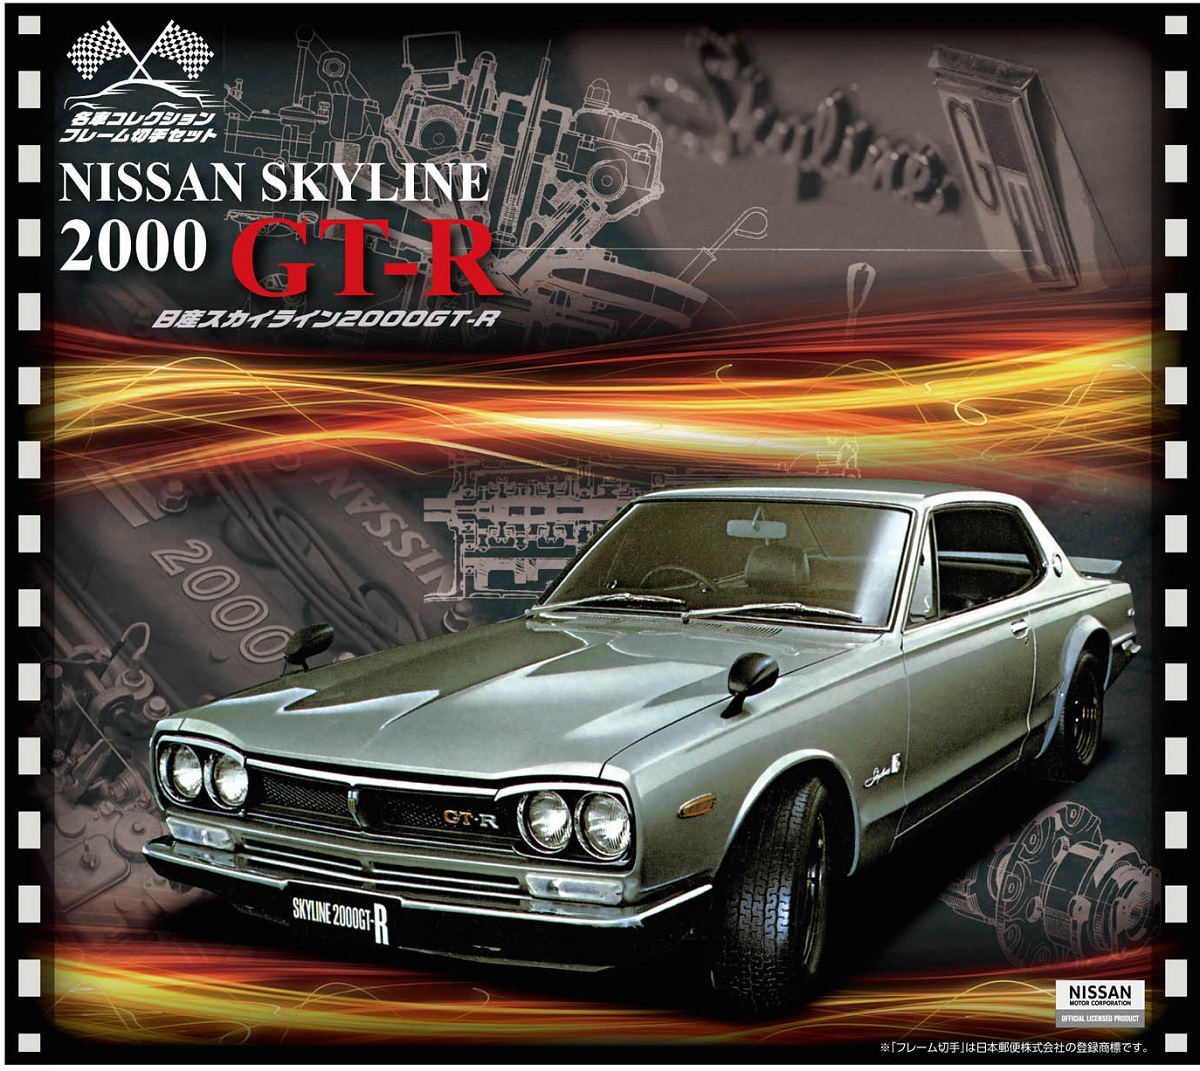 Nissan Skyline 2000GT-R